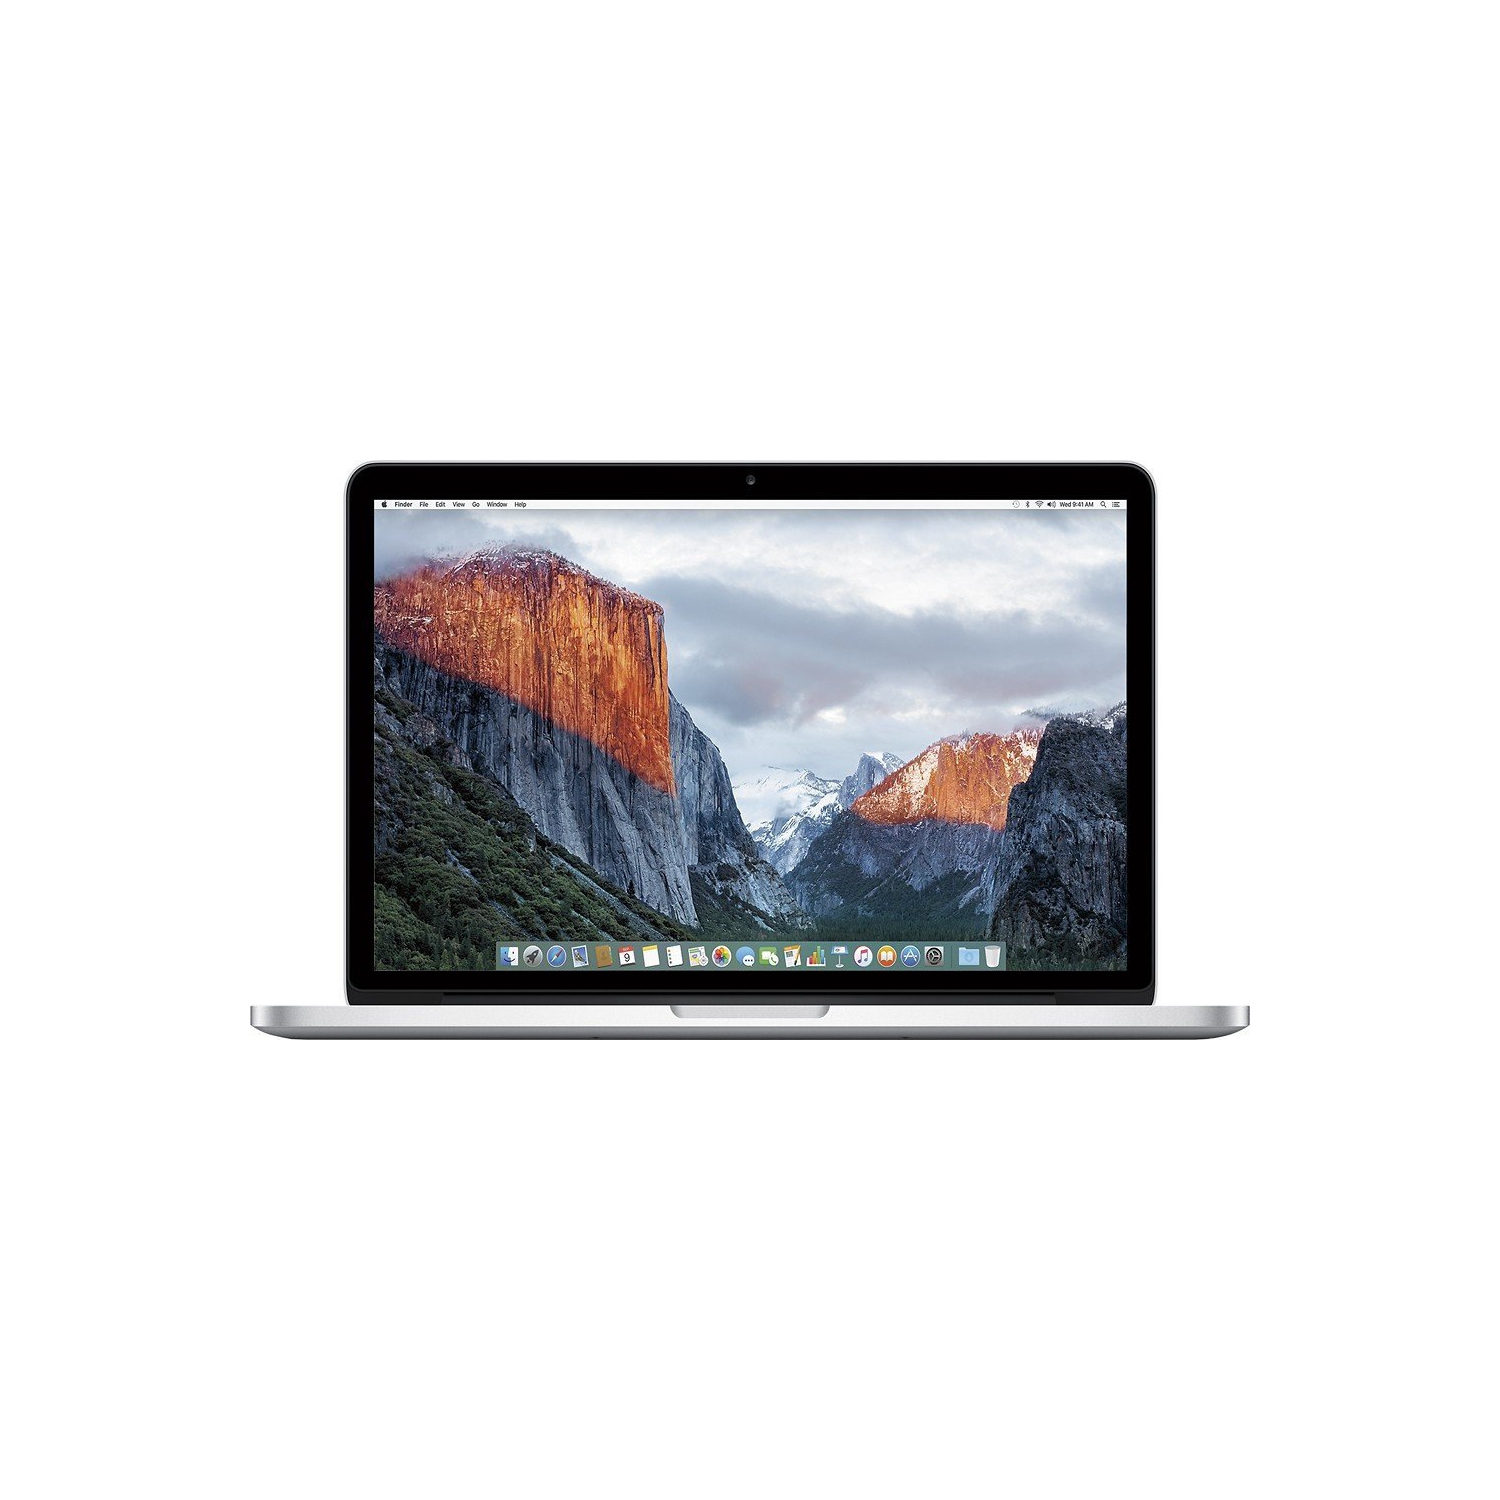 Refurbished (Good) - Apple MacBook Pro MF840LL/A 13.3-Inch 256GB Laptop w/8GB RAM & Intel Dual-Core i5 2.7 GHz (2015 Model)